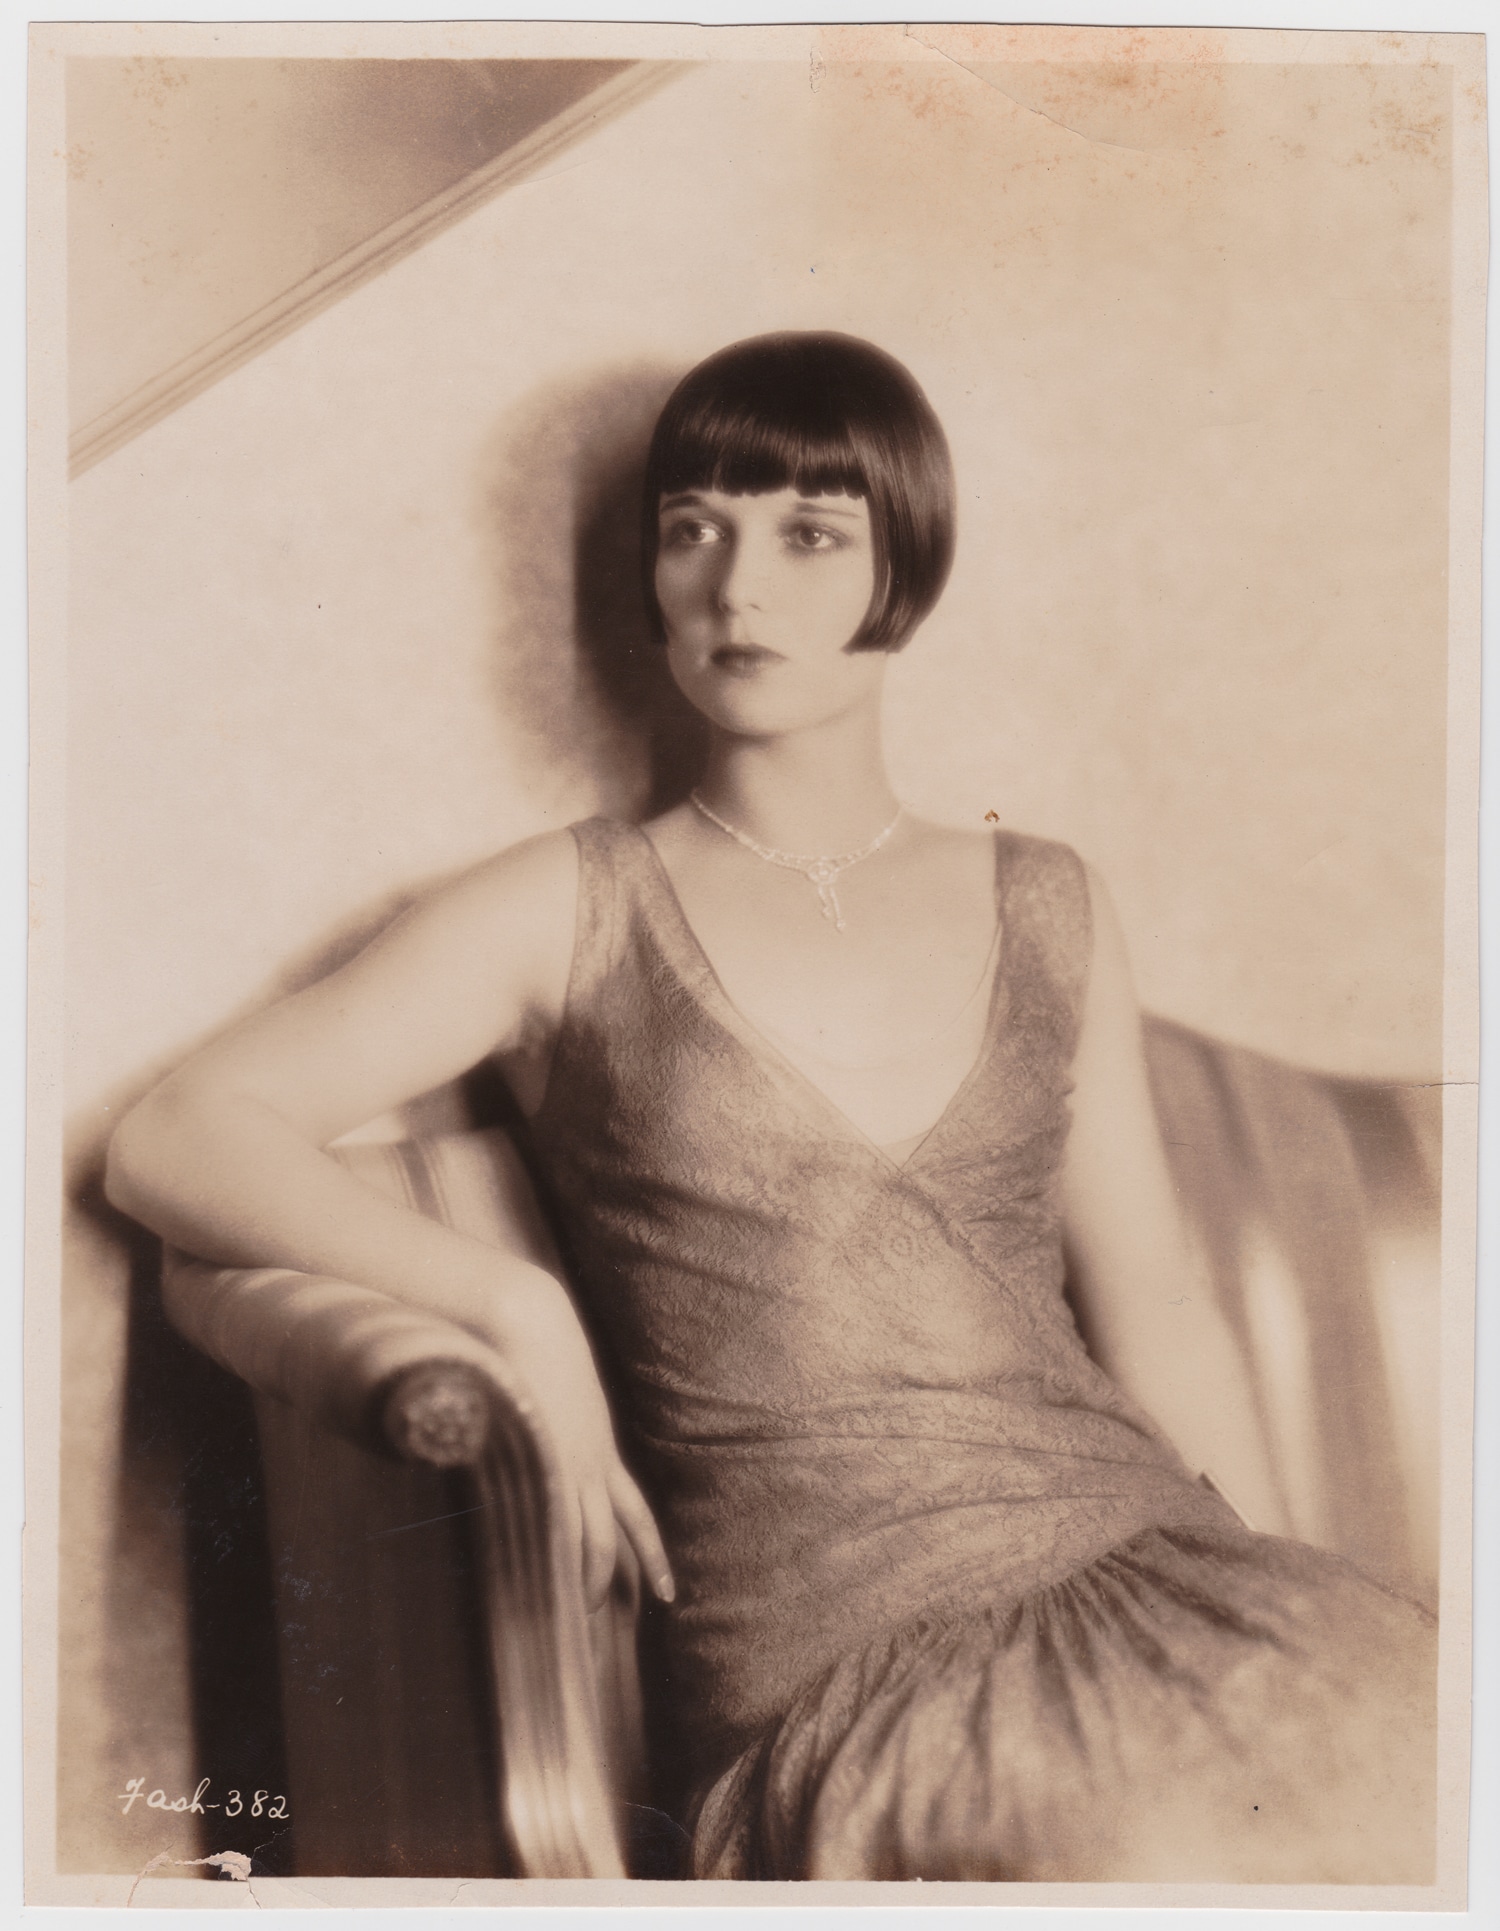 1929 Louise Brooks Fashion Publicity Still Fash-382